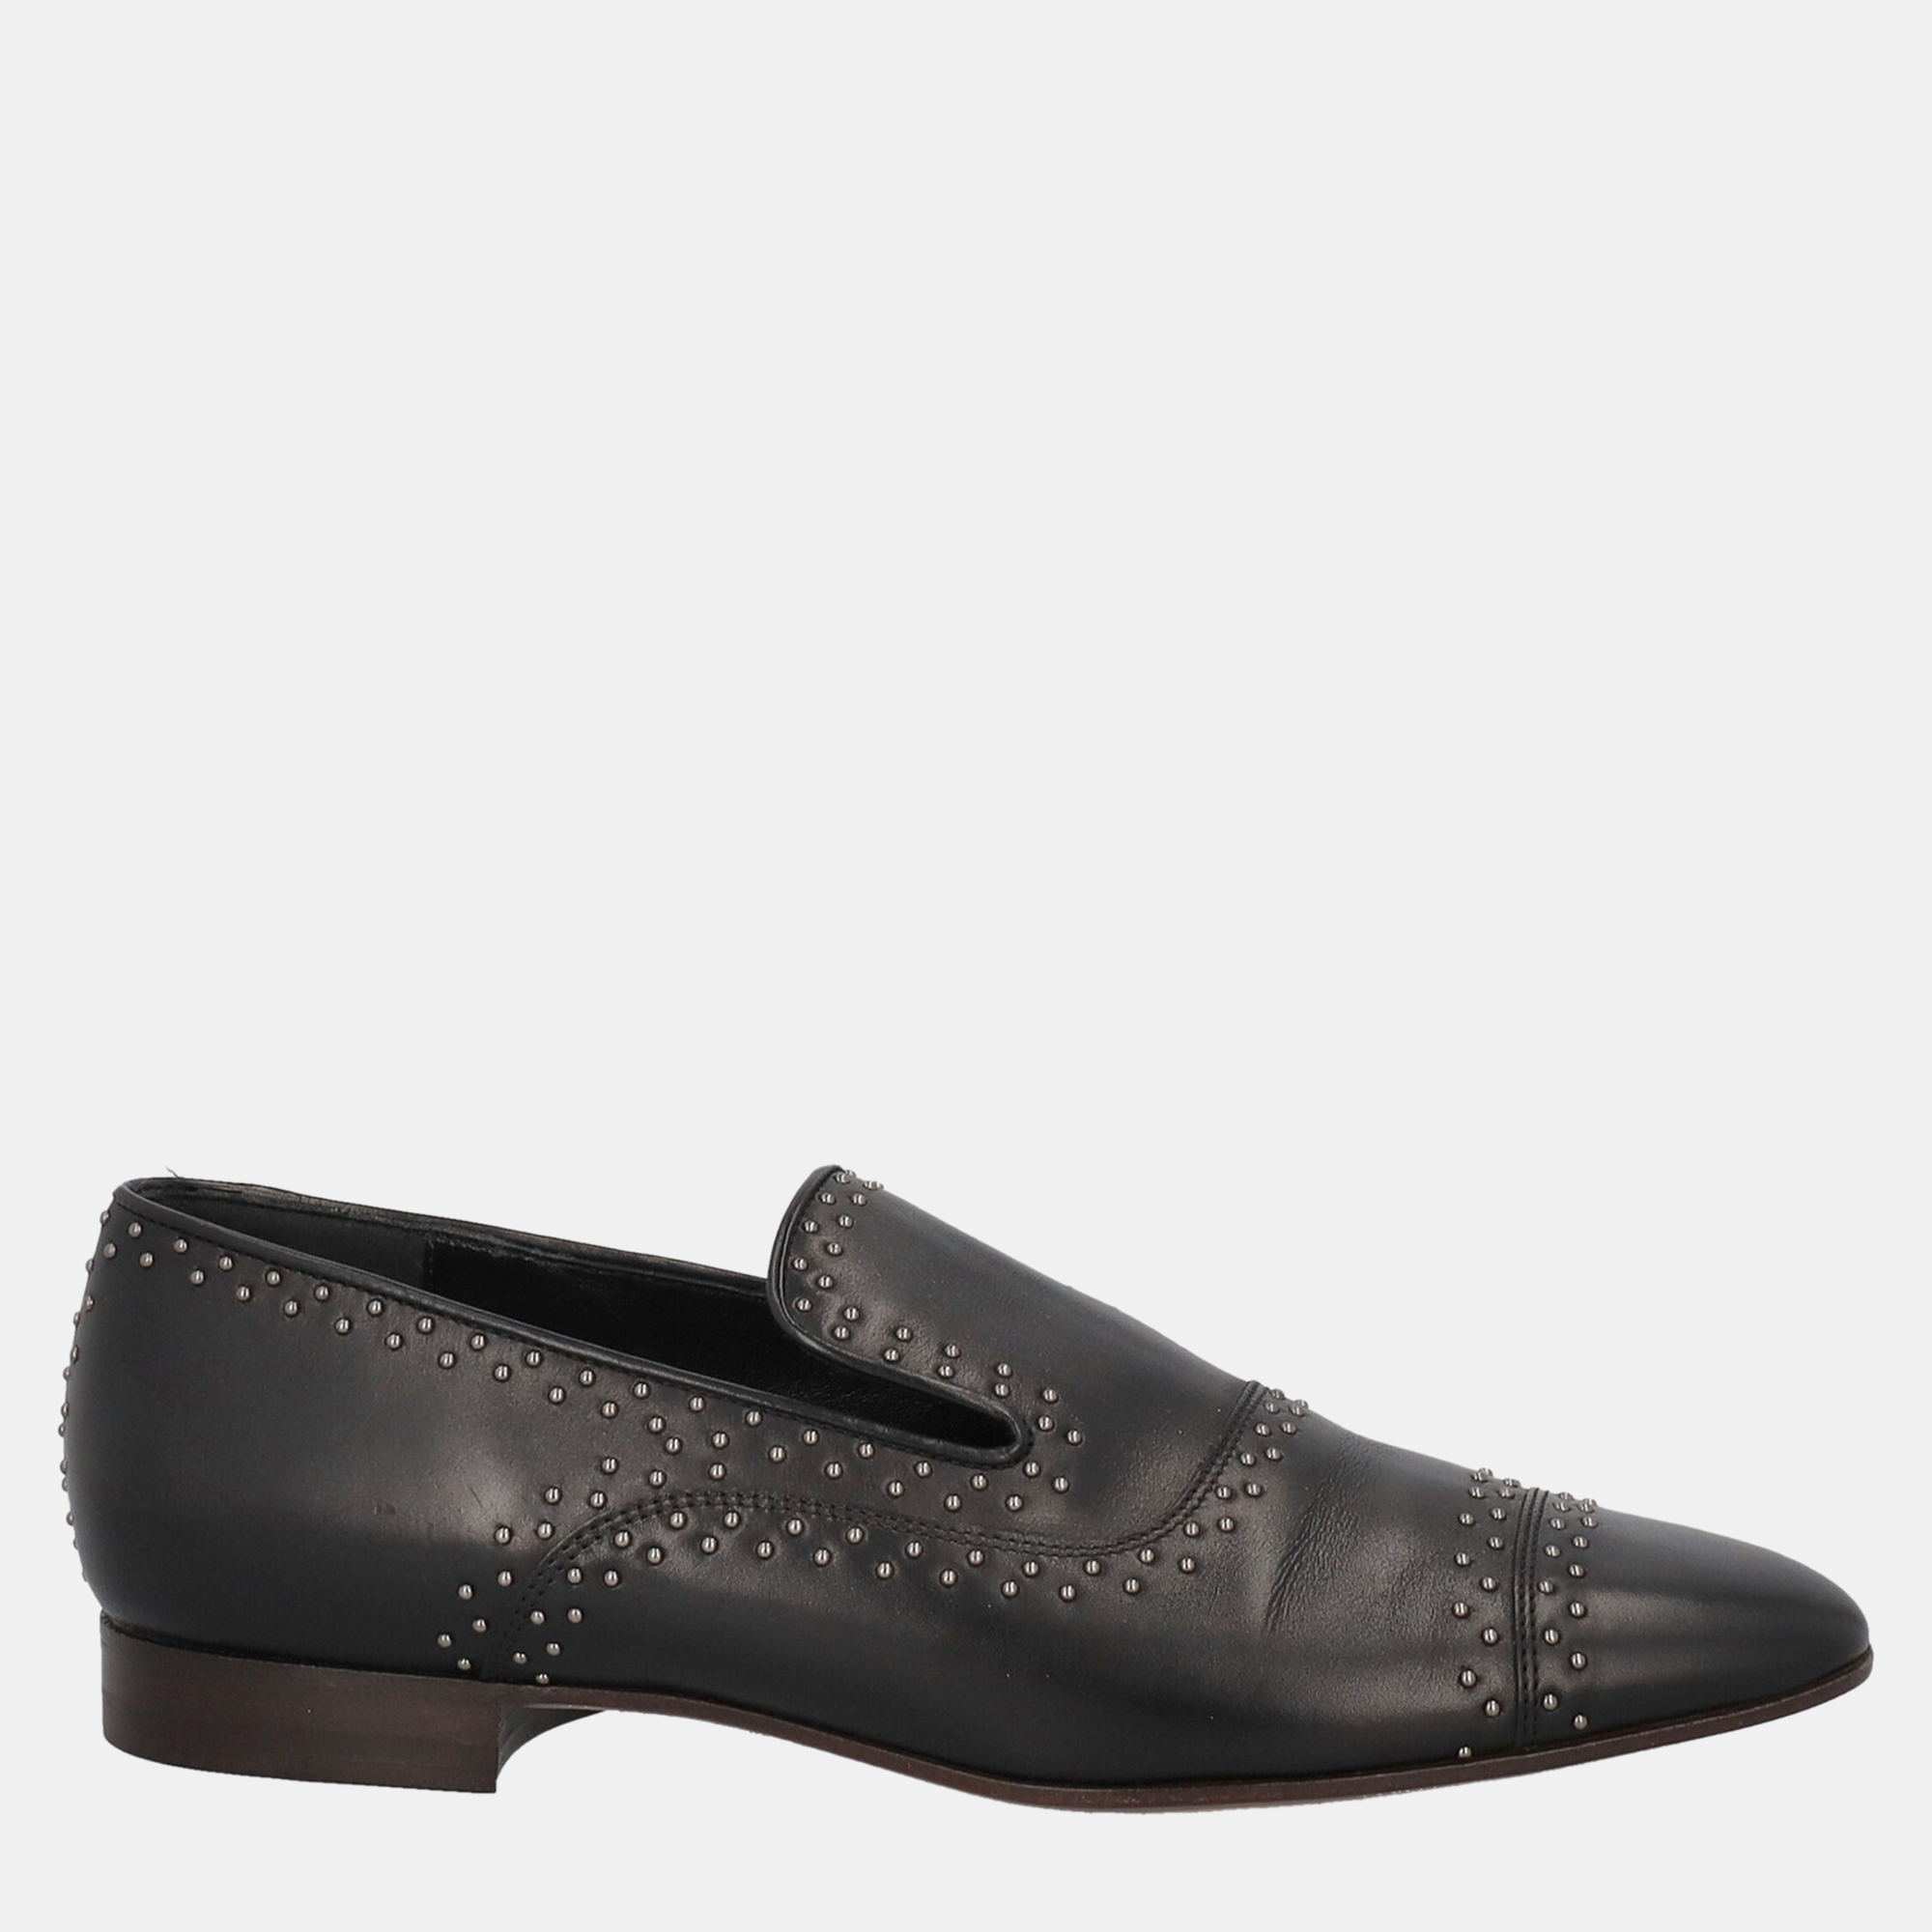 Giorgio Armani  Women's Leather Loafers - Black - EU 37